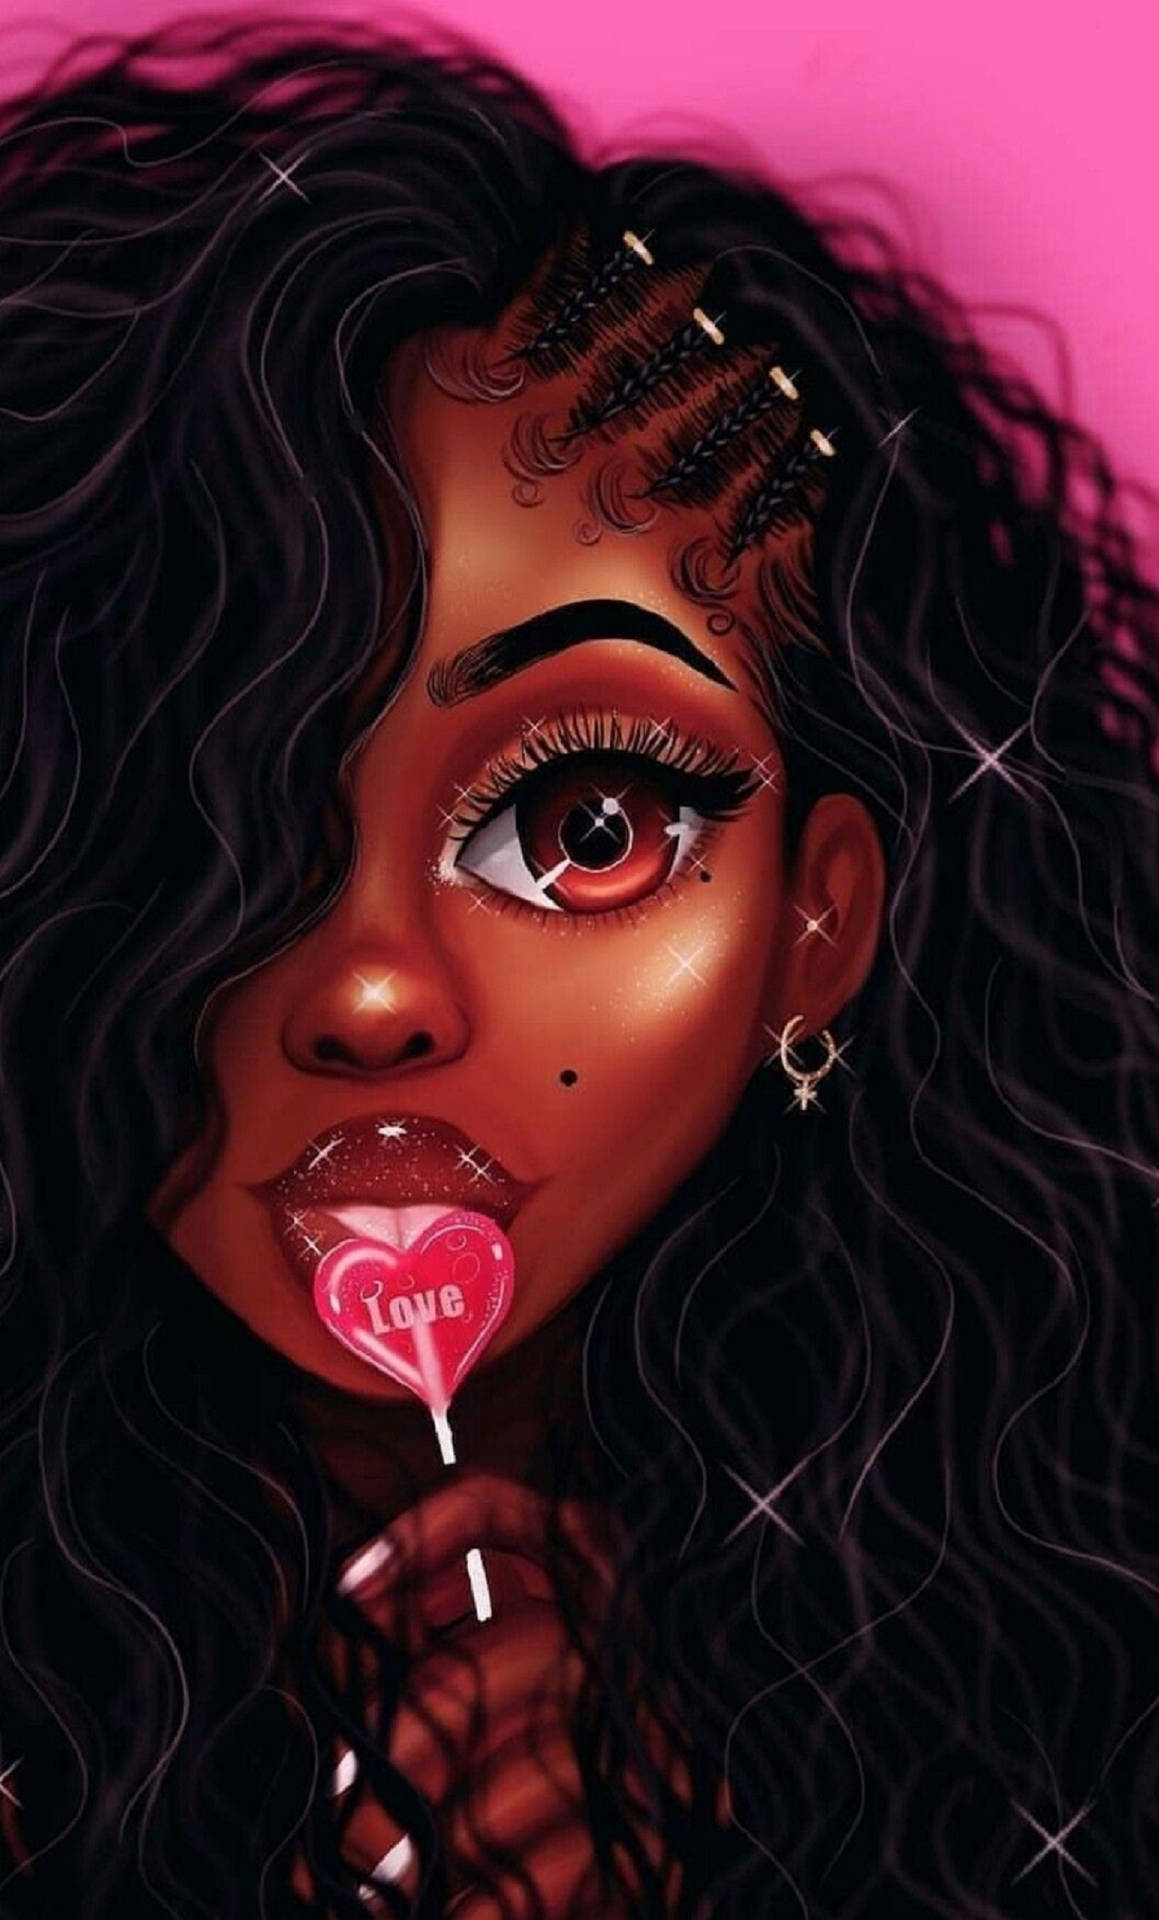 Free Cute Black Girls Wallpaper Downloads, Cute Black Girls Wallpaper for FREE